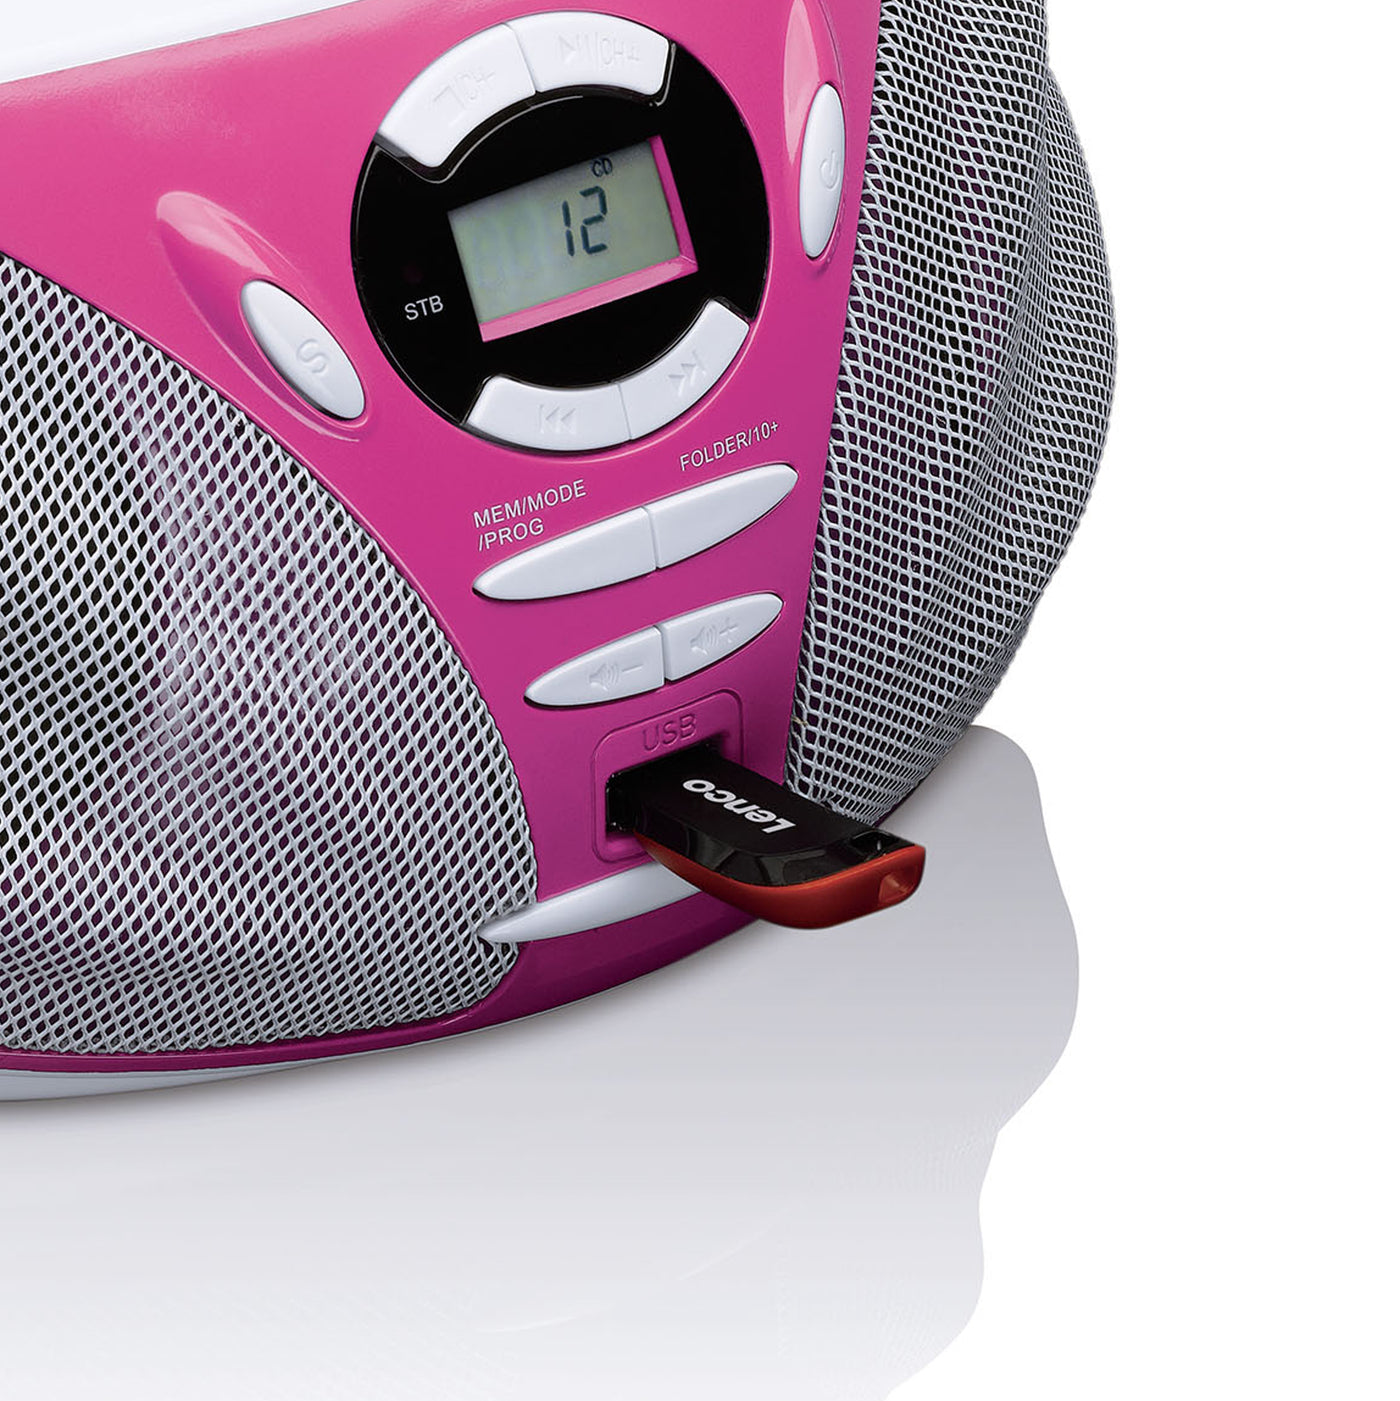 Lenco SCD-300PK - Tragbares Radio MP3 CD USB - Pink